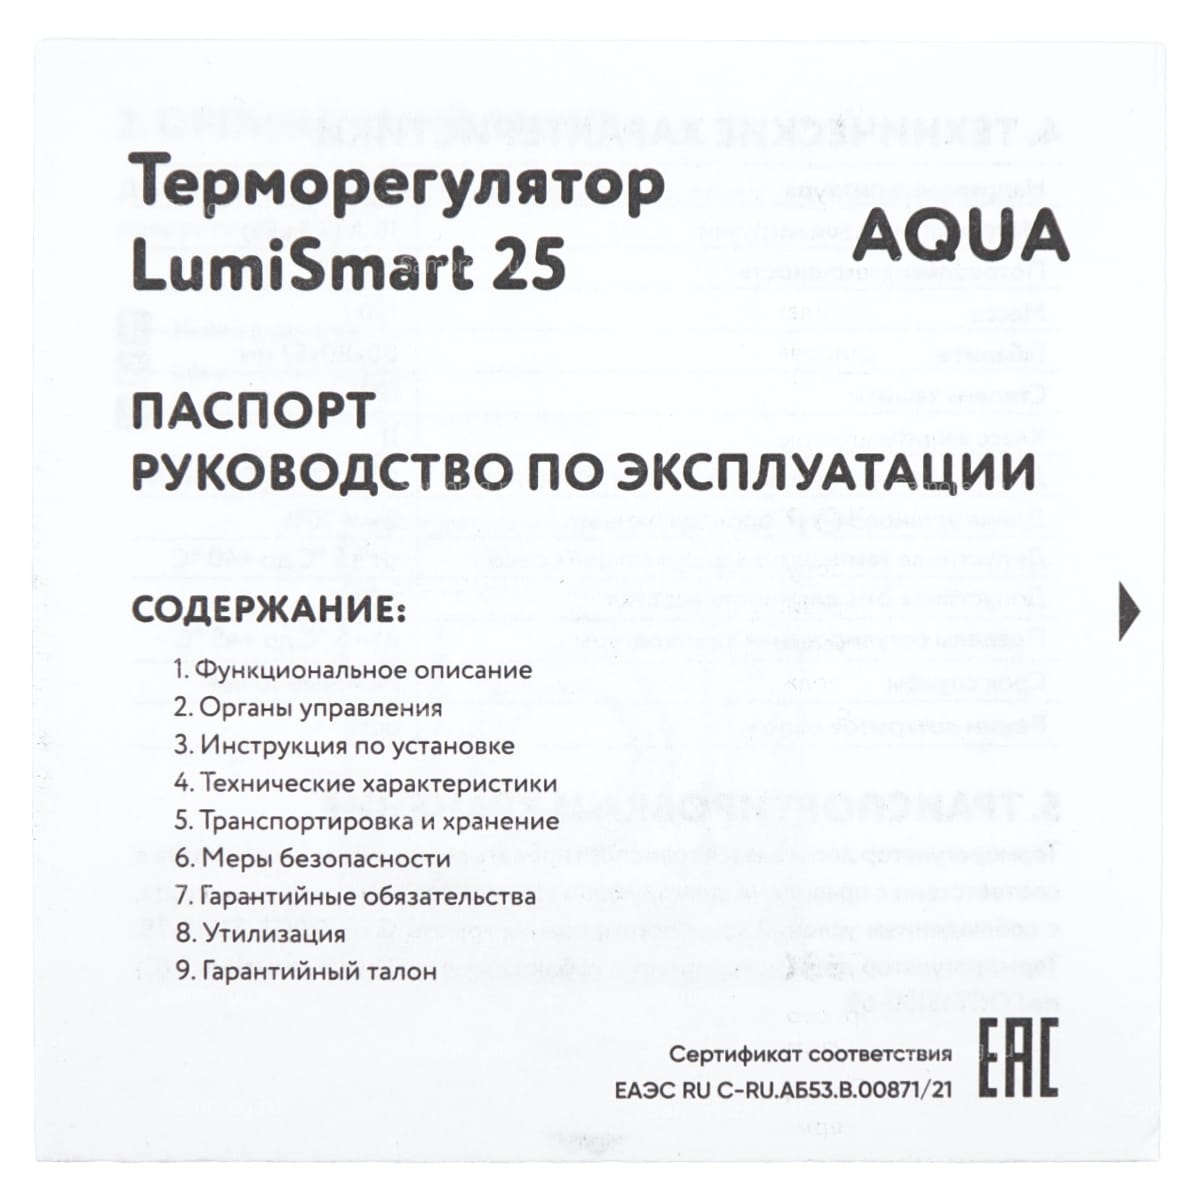 Терморегулятор Теплолюкс LumiSmart 25 Aqua